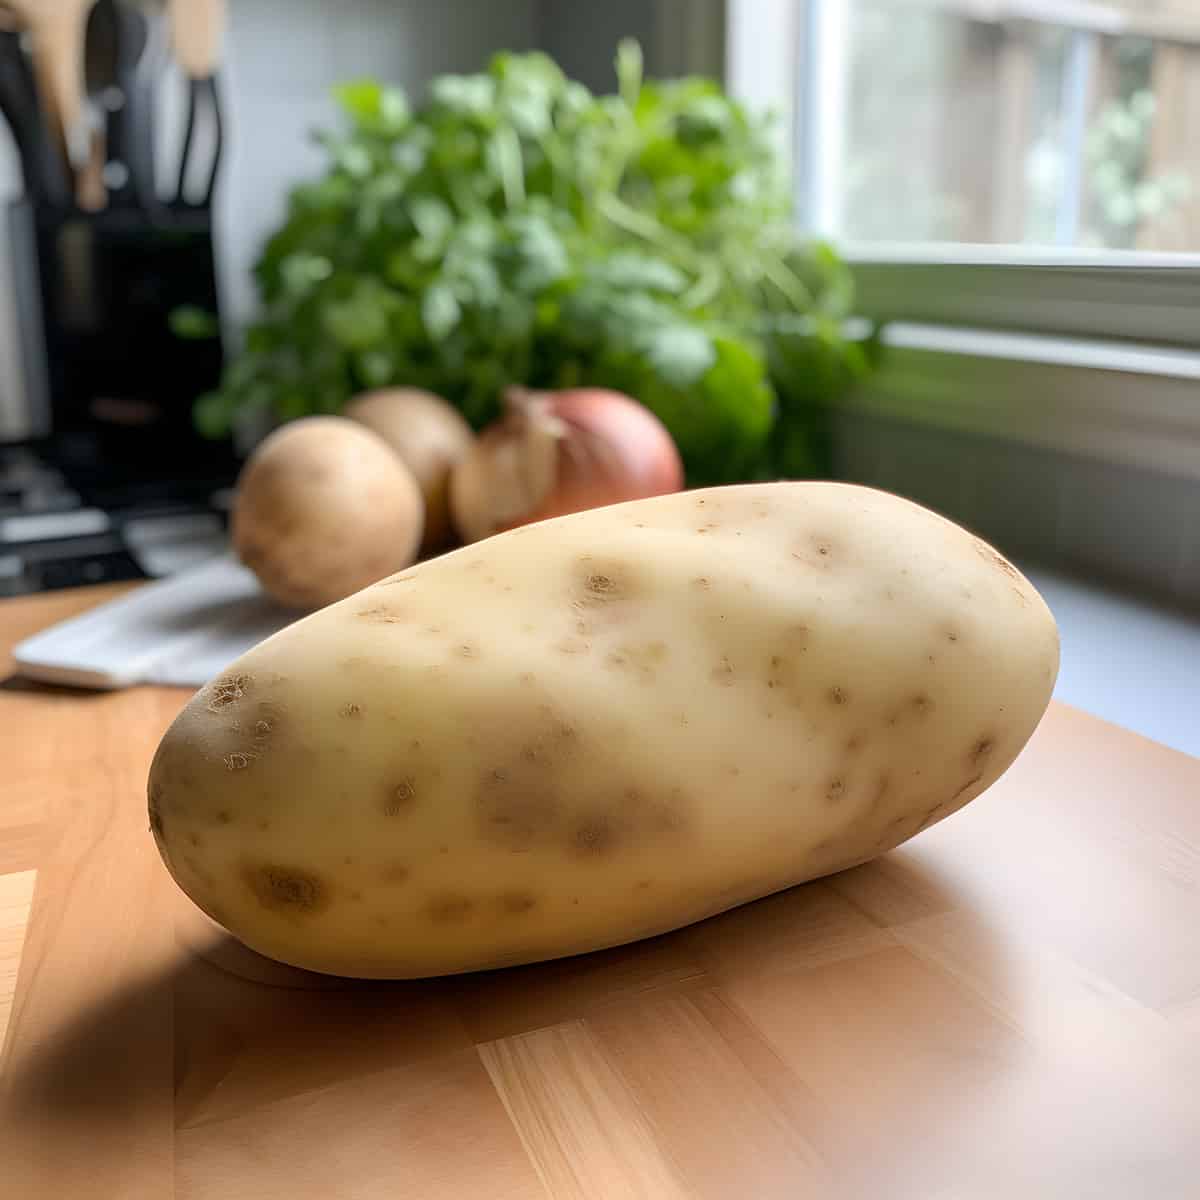 Ulster Emblem Potatoes on a kitchen counter